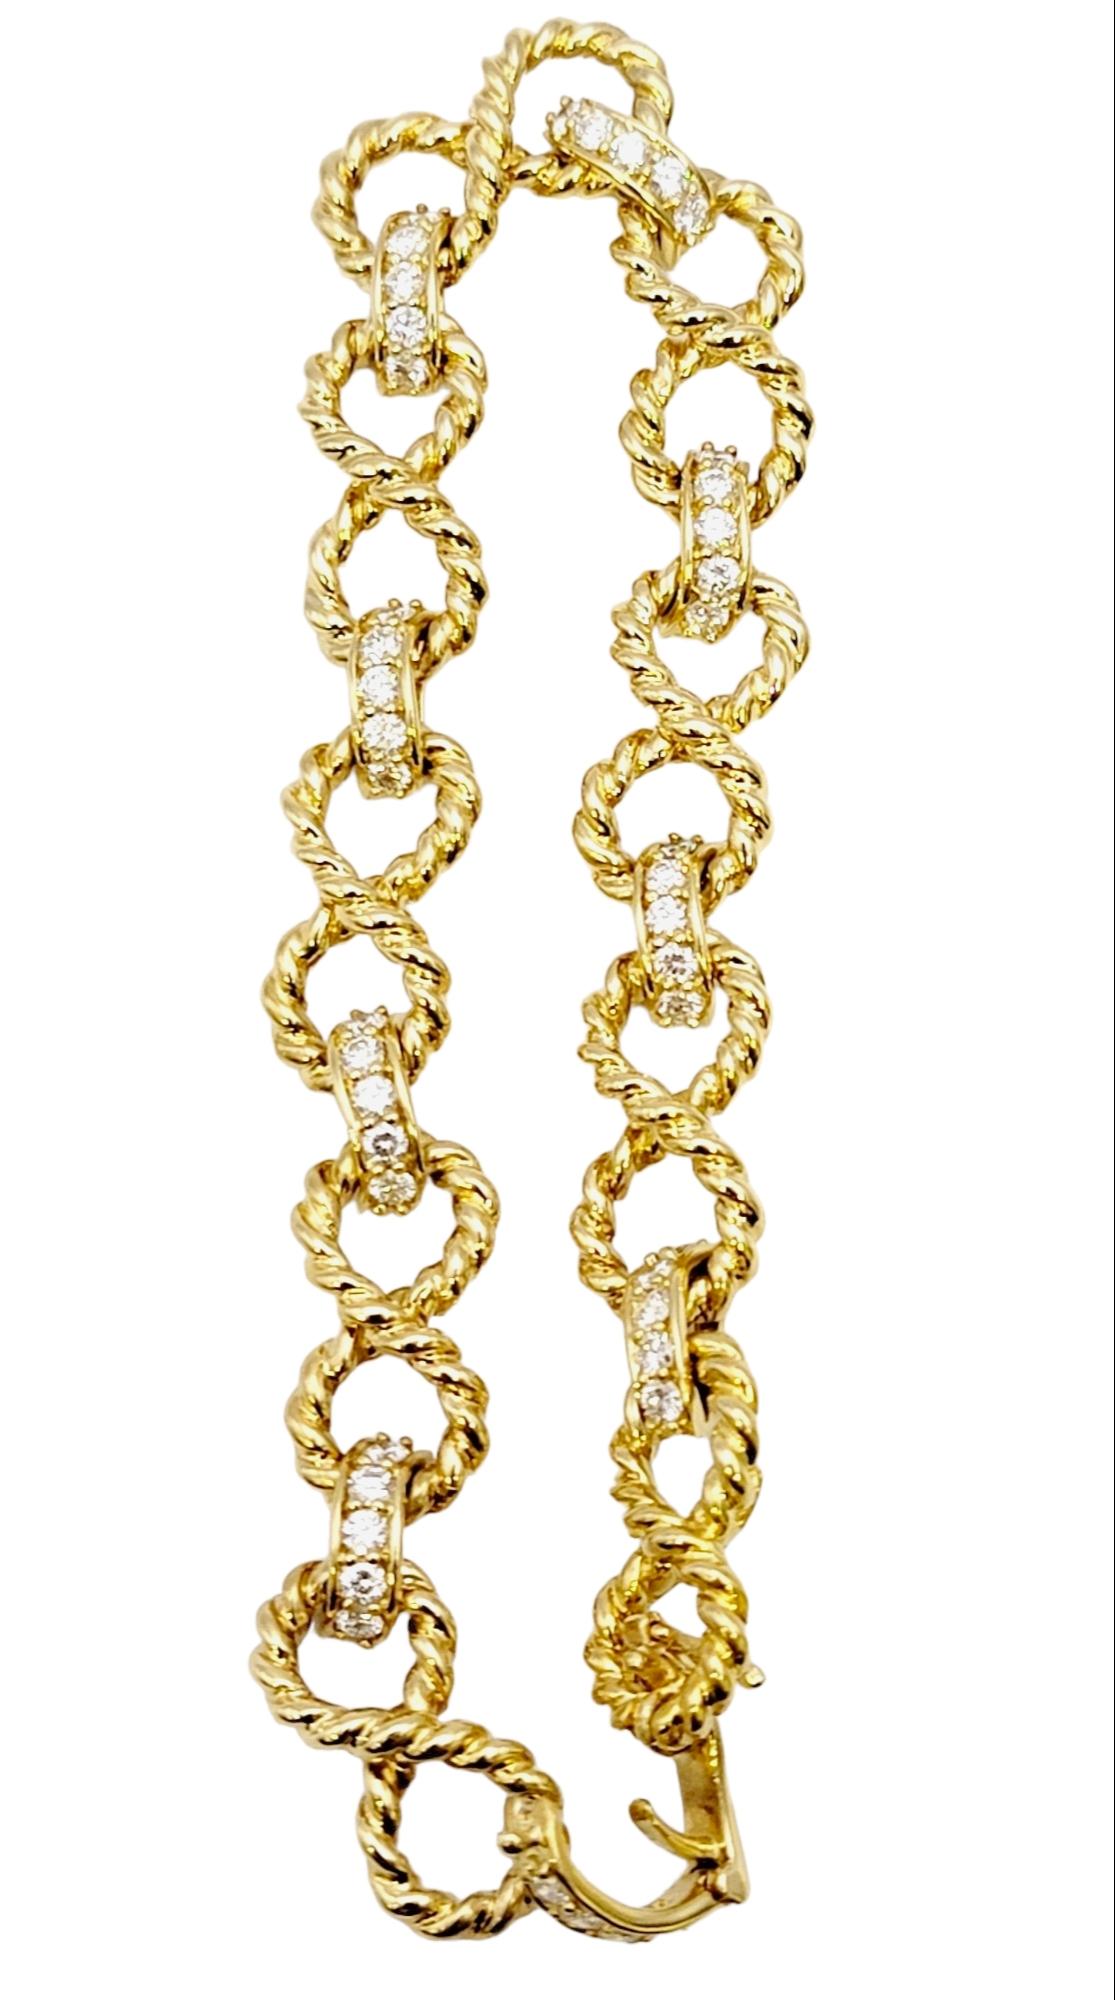 Contemporary Vintage Tiffany & Co. Infinity Link Bracelet with Diamonds 18 Karat Yellow Gold